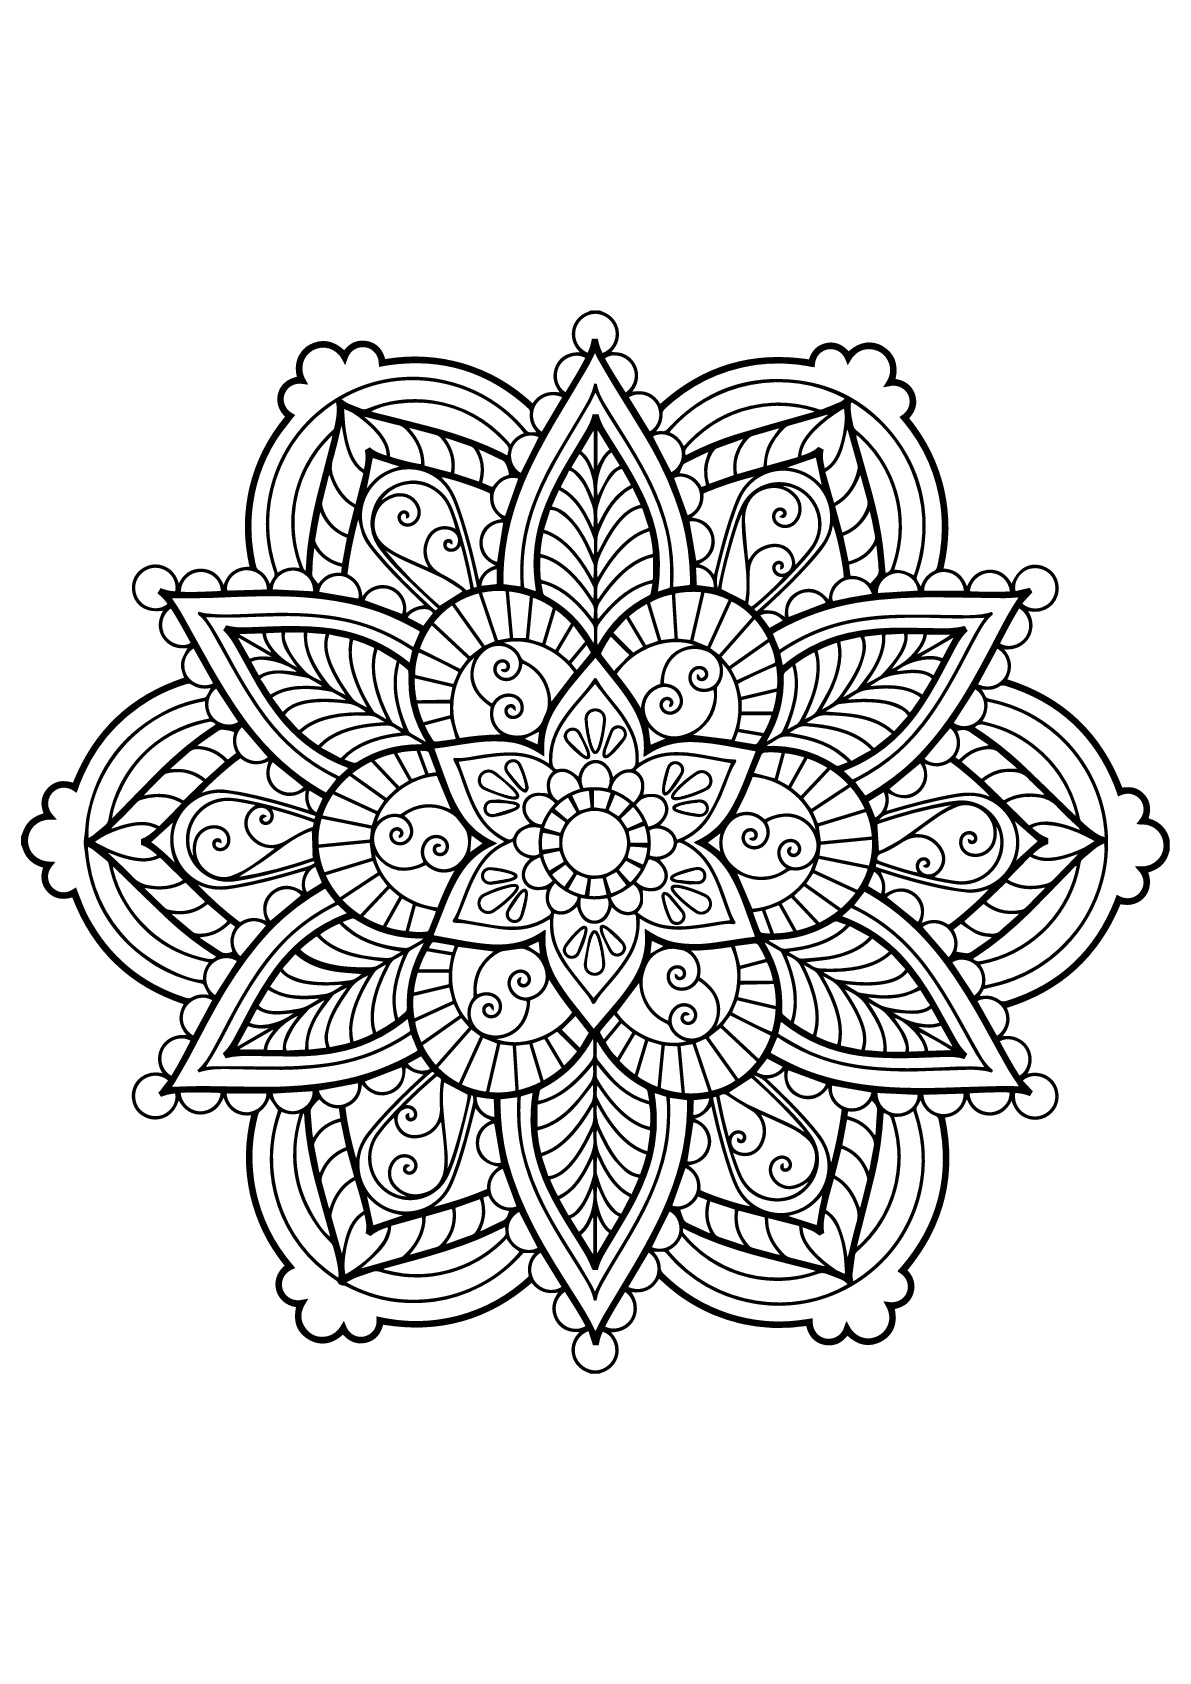 Mandala from free coloring books for adults - 28 - Mandalas Adult